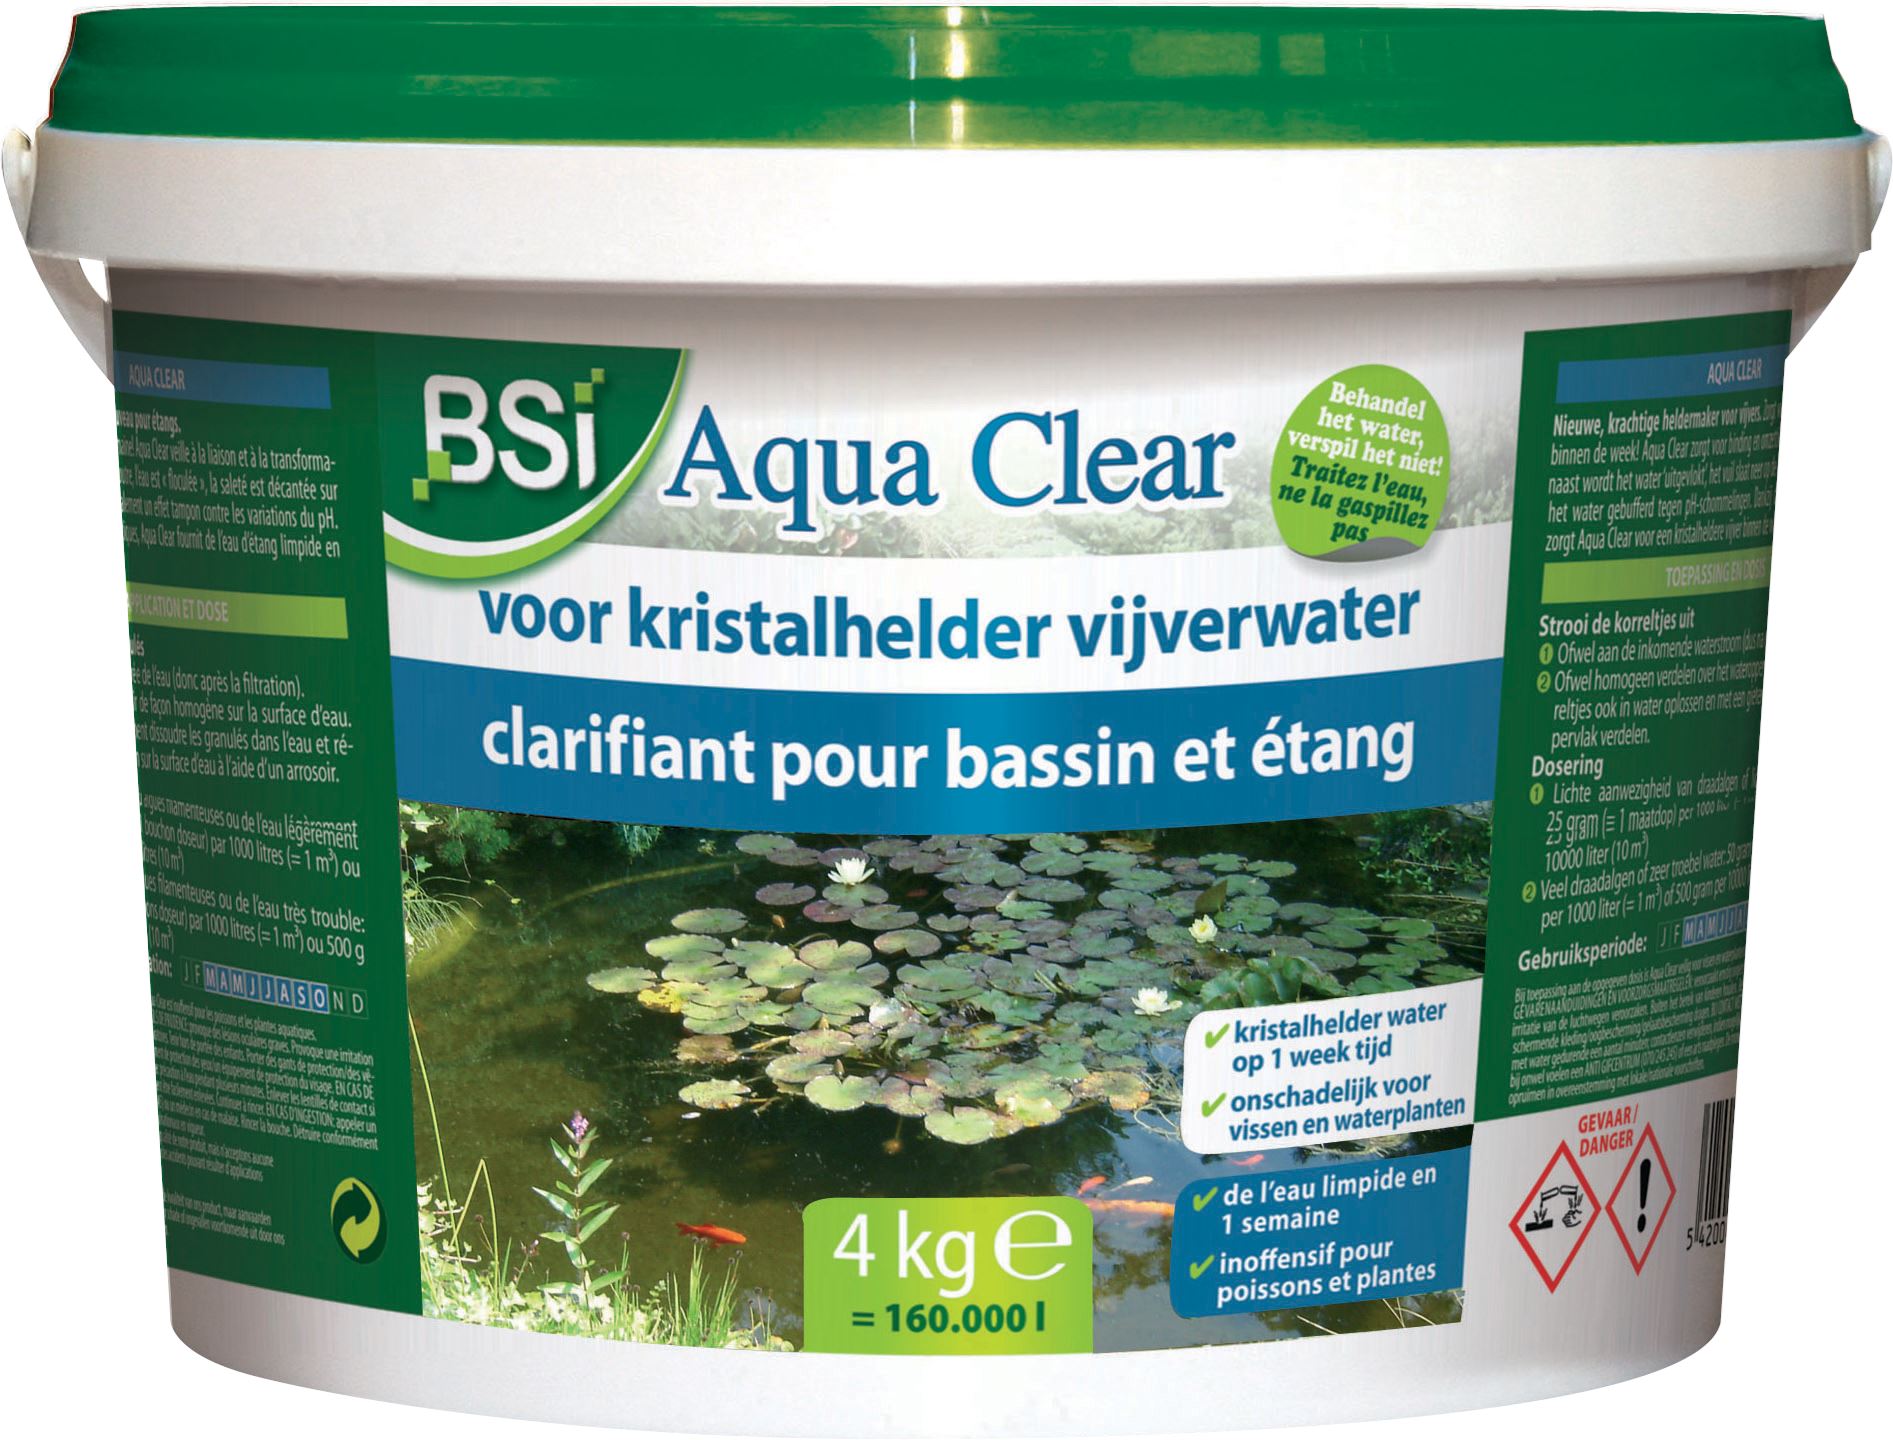 Aqua-clear-4kg-Kristalhelder-vijverwater-binnen-de-week